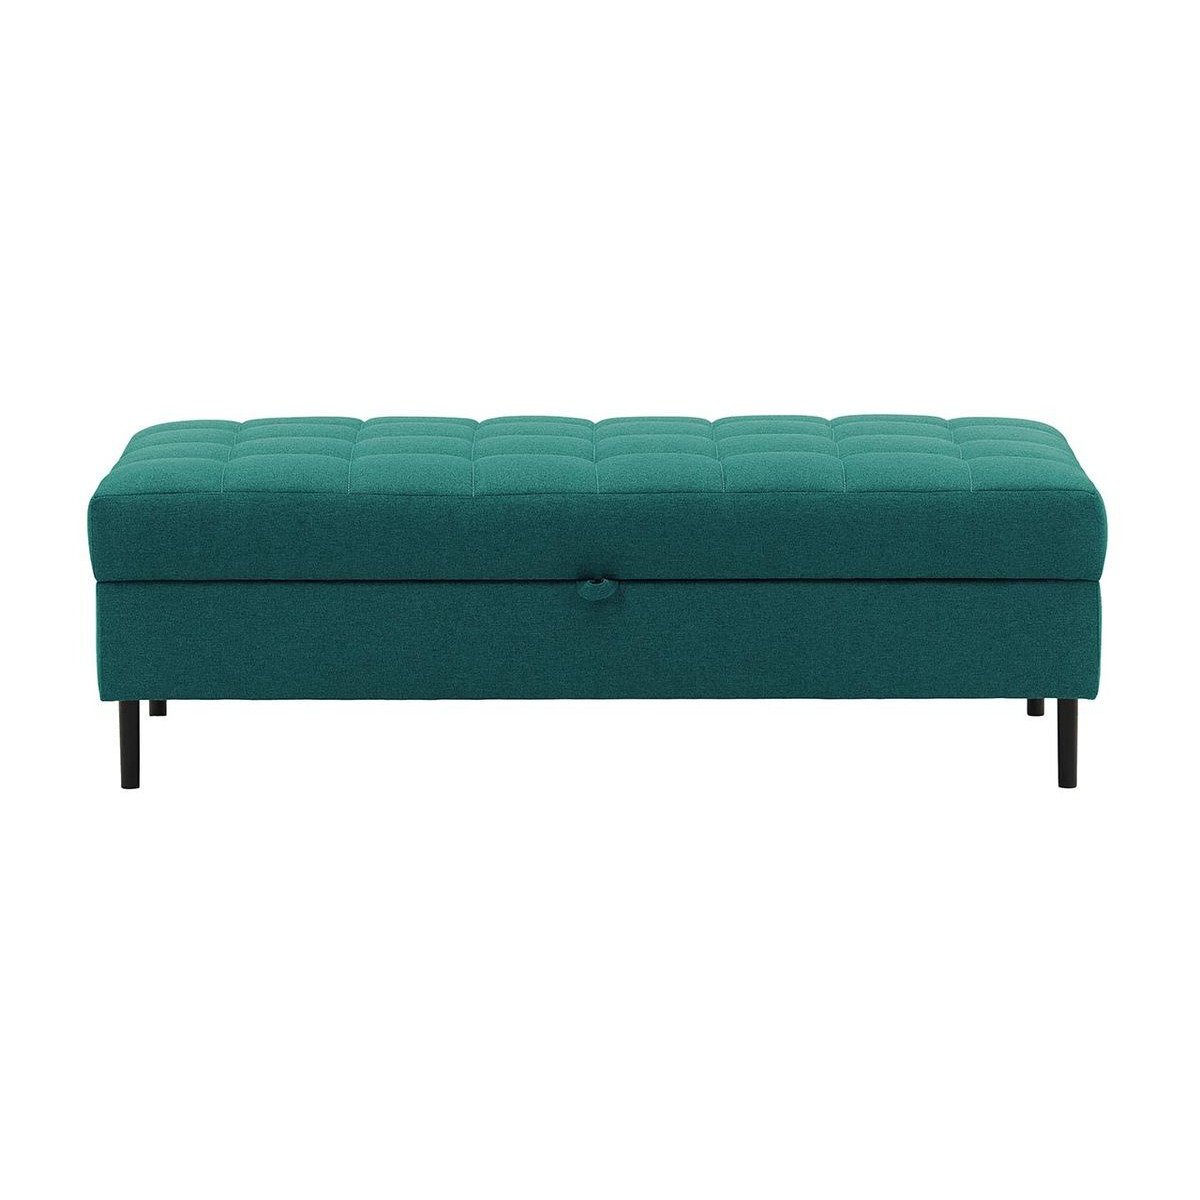 Ludo Footstool with Storage, turquoise - image 1